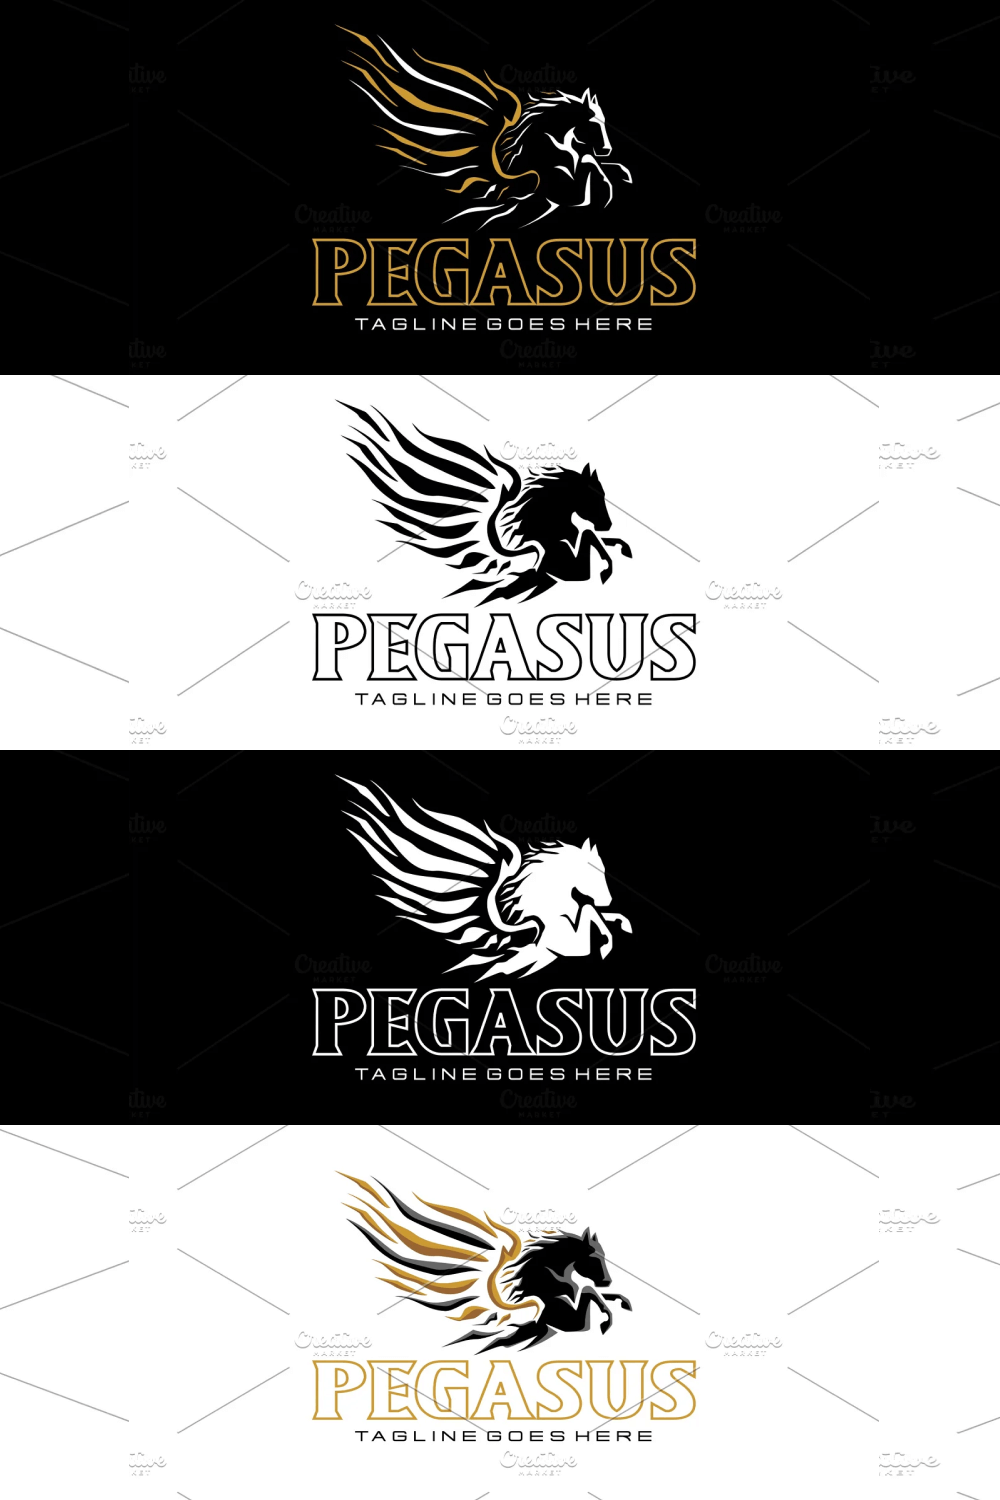 Pegasus logo company name.